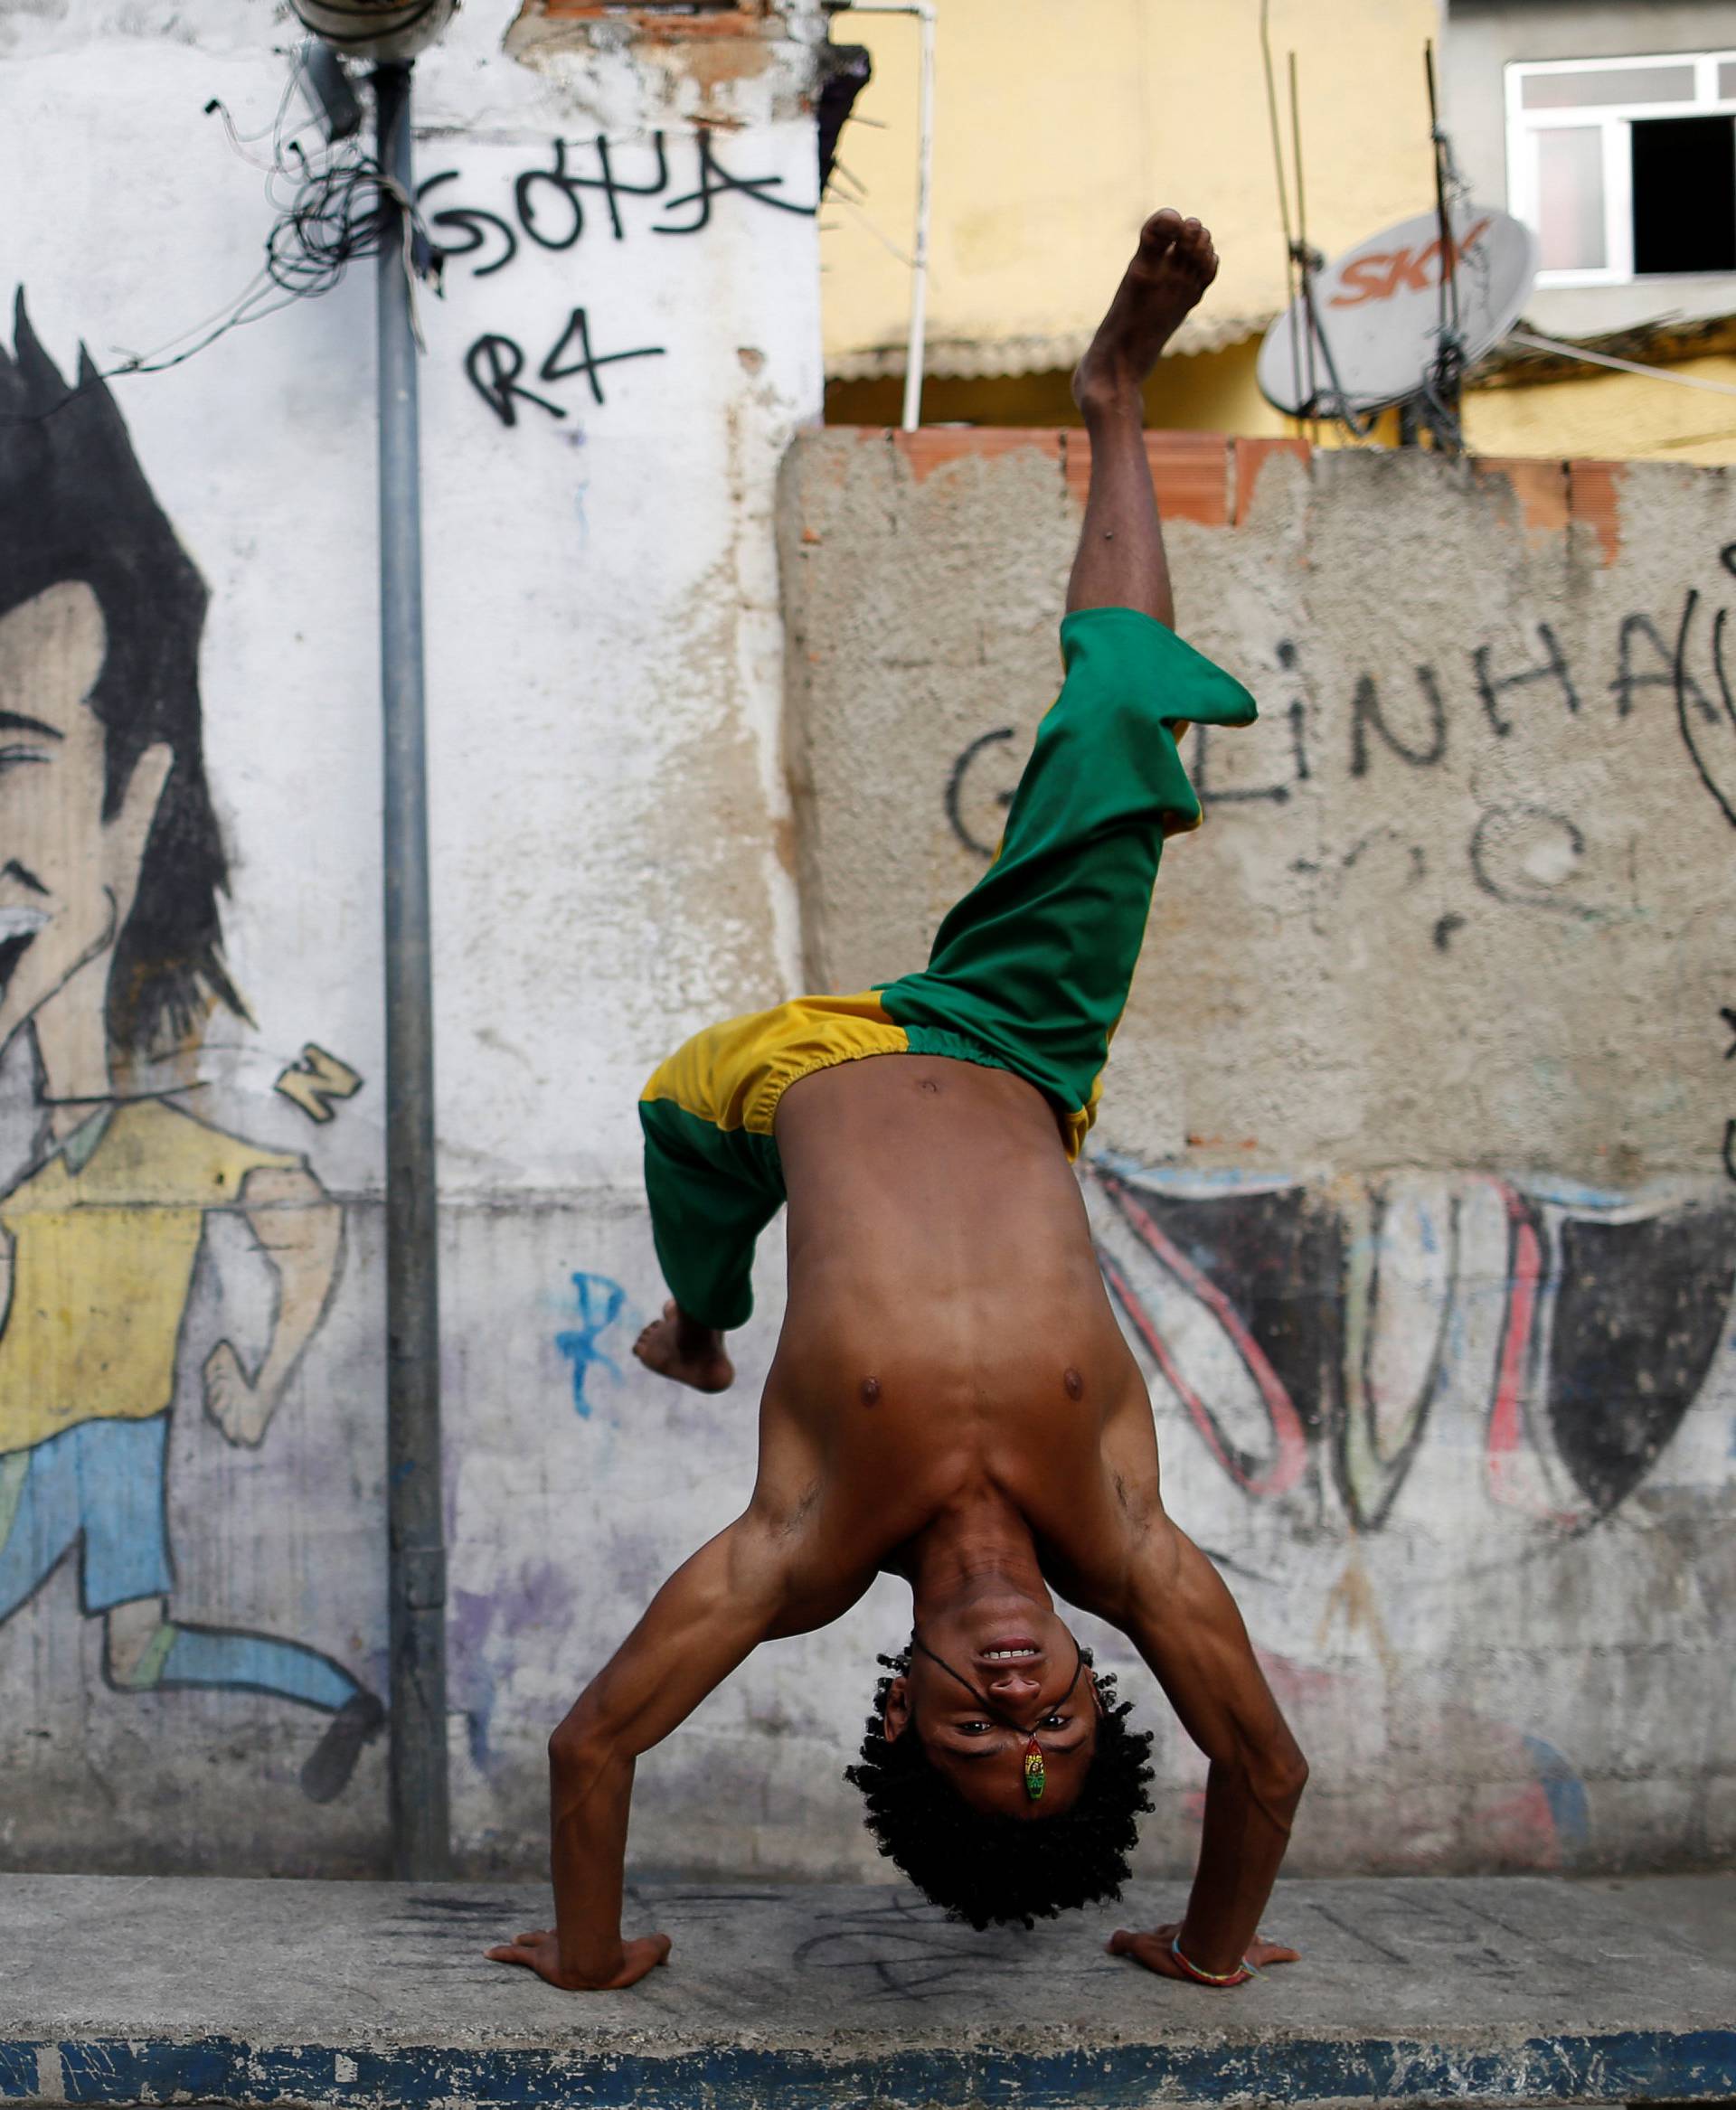 2016 Rio Olympics: Teaching community through capoeira 